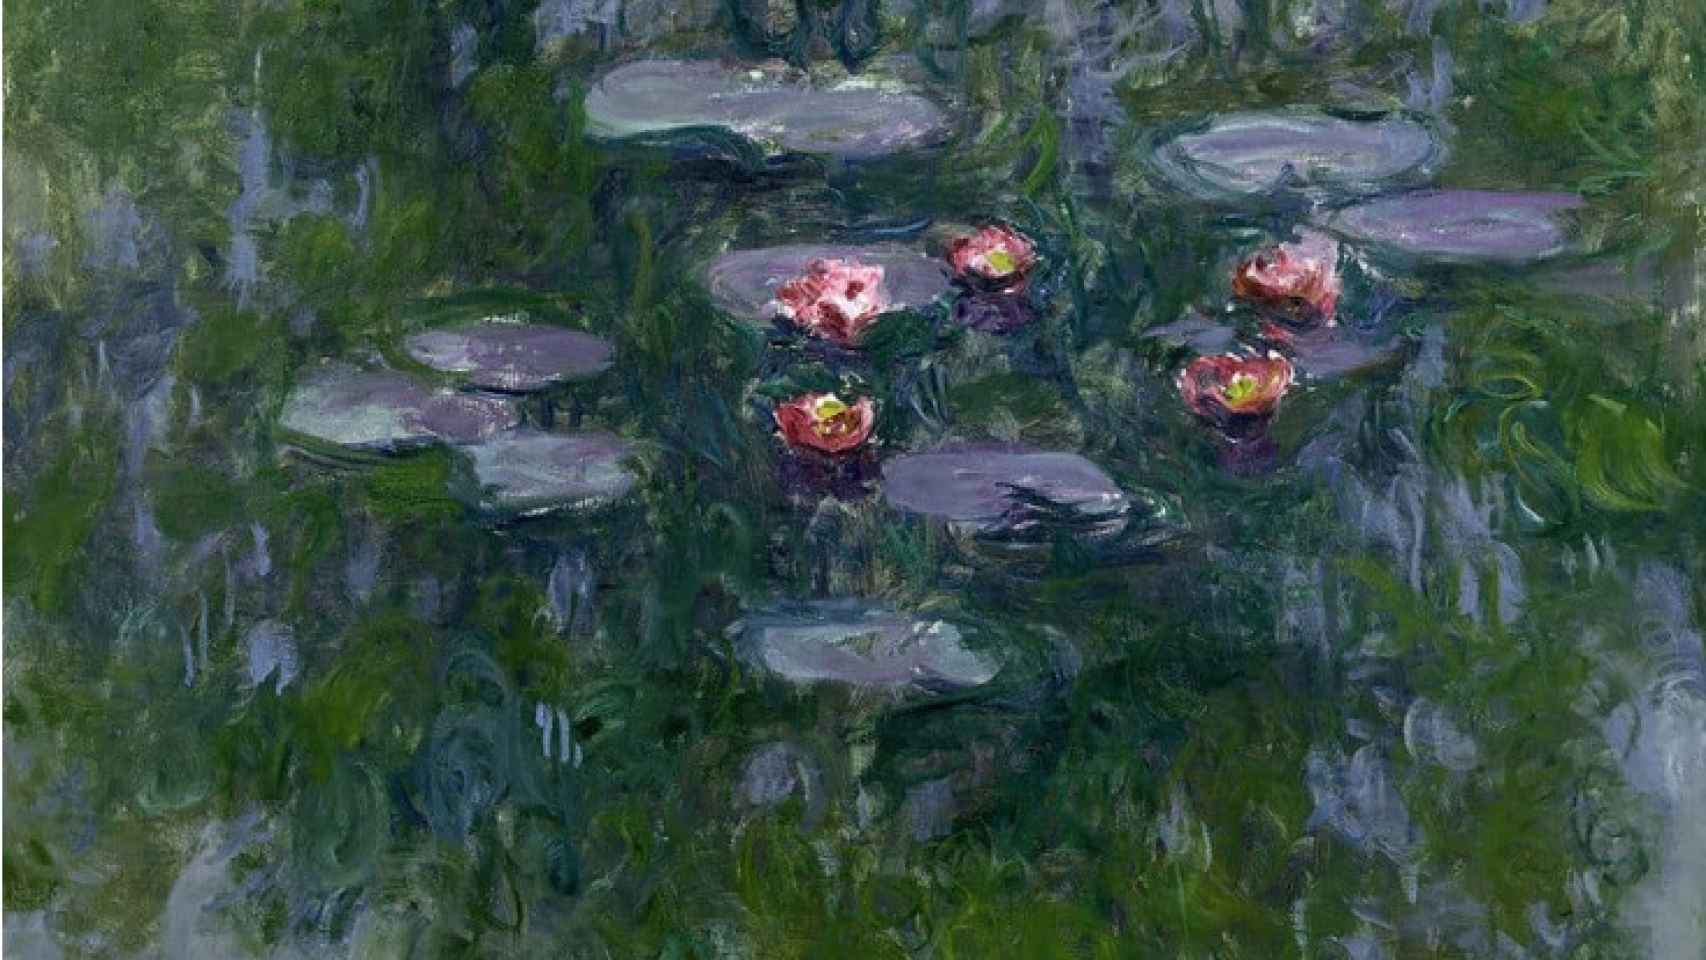 Pintura de la serie de cuadros de Monet conocida como 'Nenúfares'.